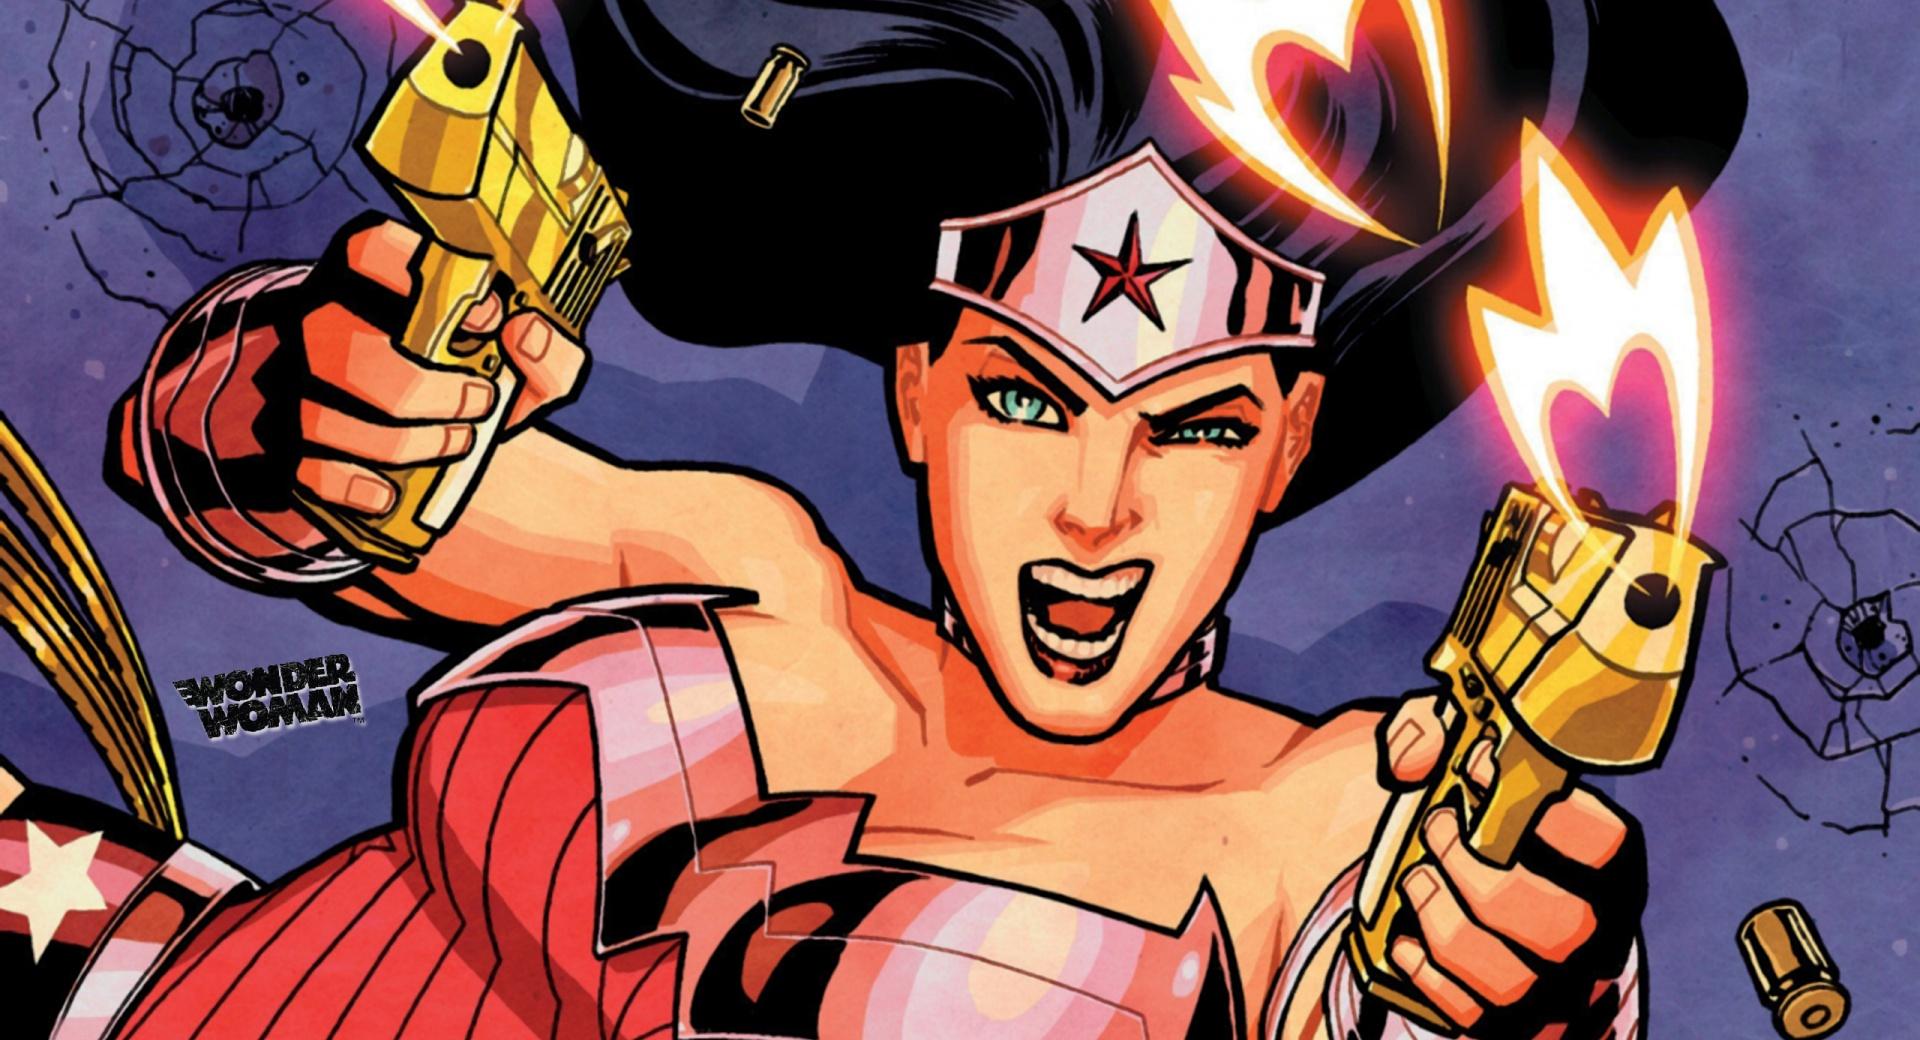 Wonder Woman Gunfight at 1024 x 1024 iPad size wallpapers HD quality